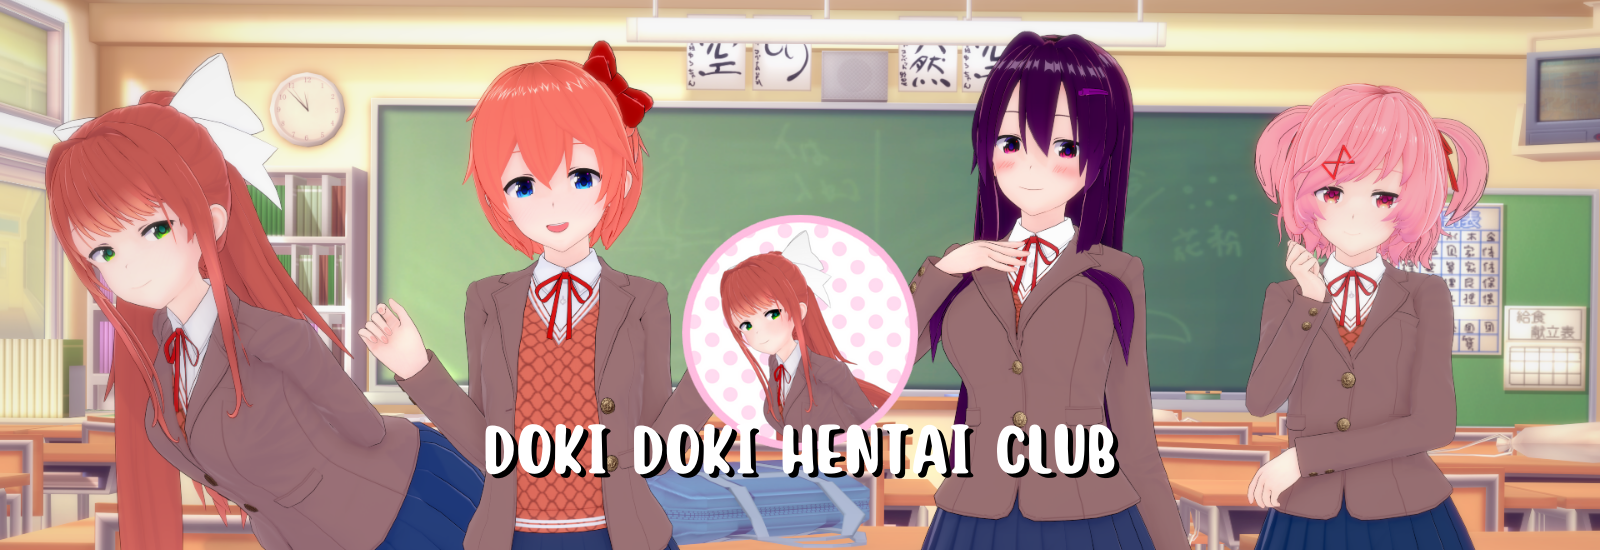 Doki Doki Literature Club APK for Android Download